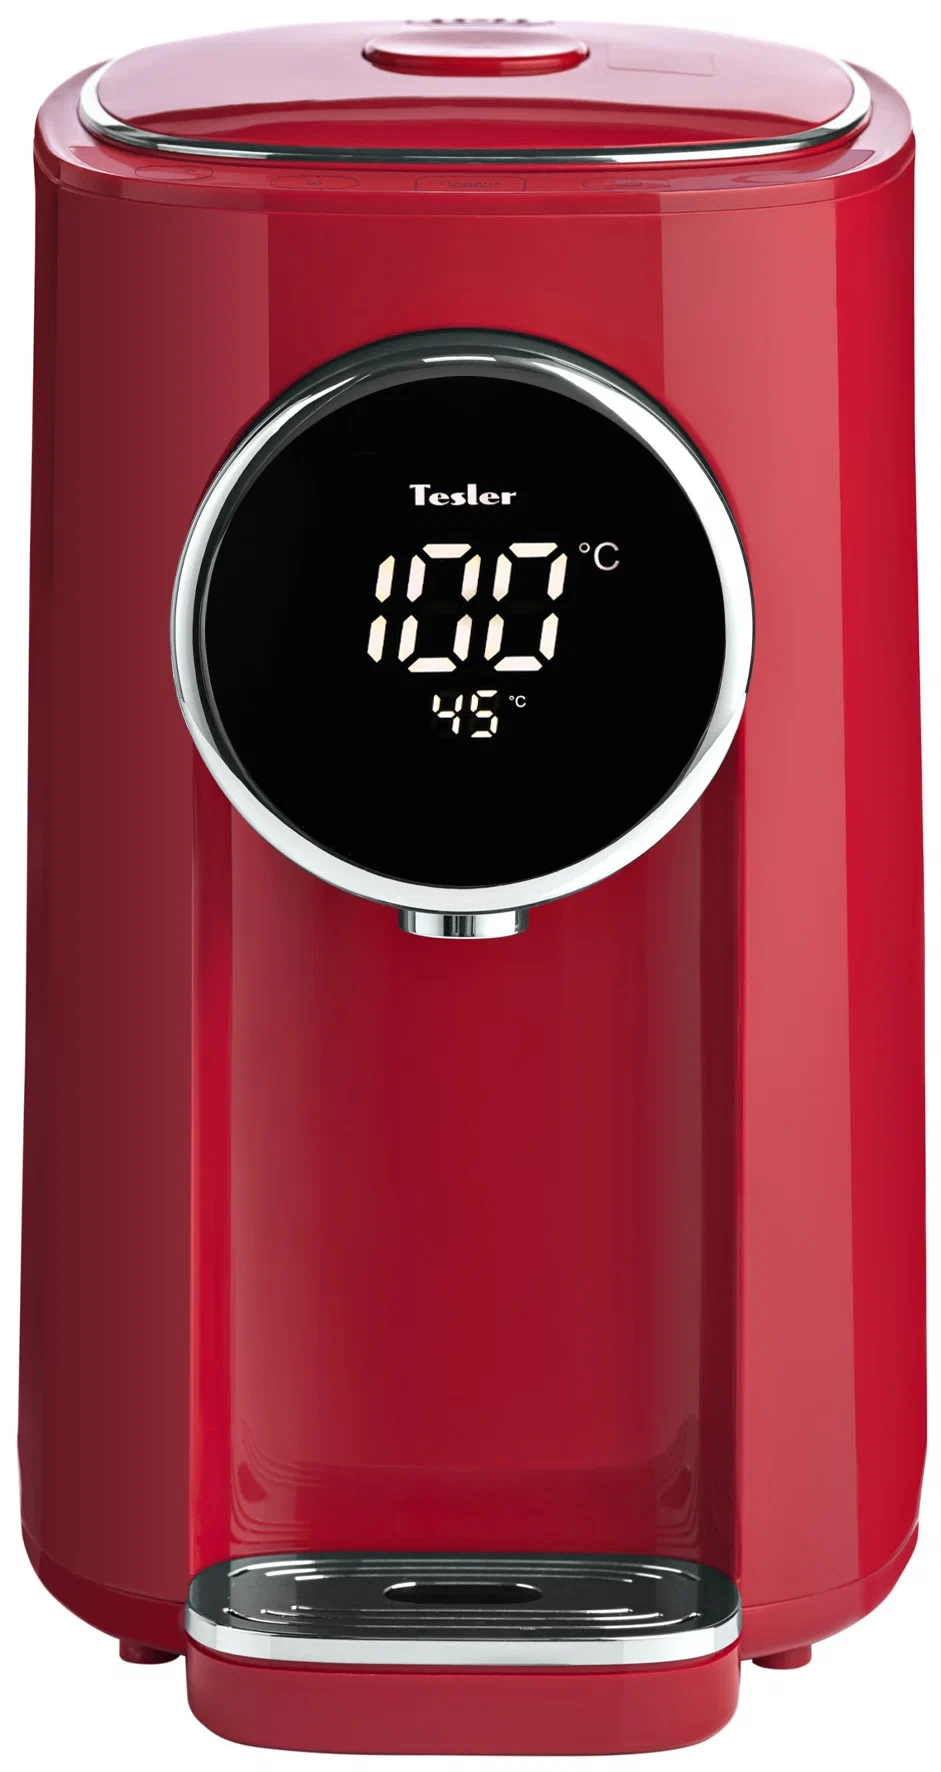 Tesler TP-5055 - материал корпуса: пластик